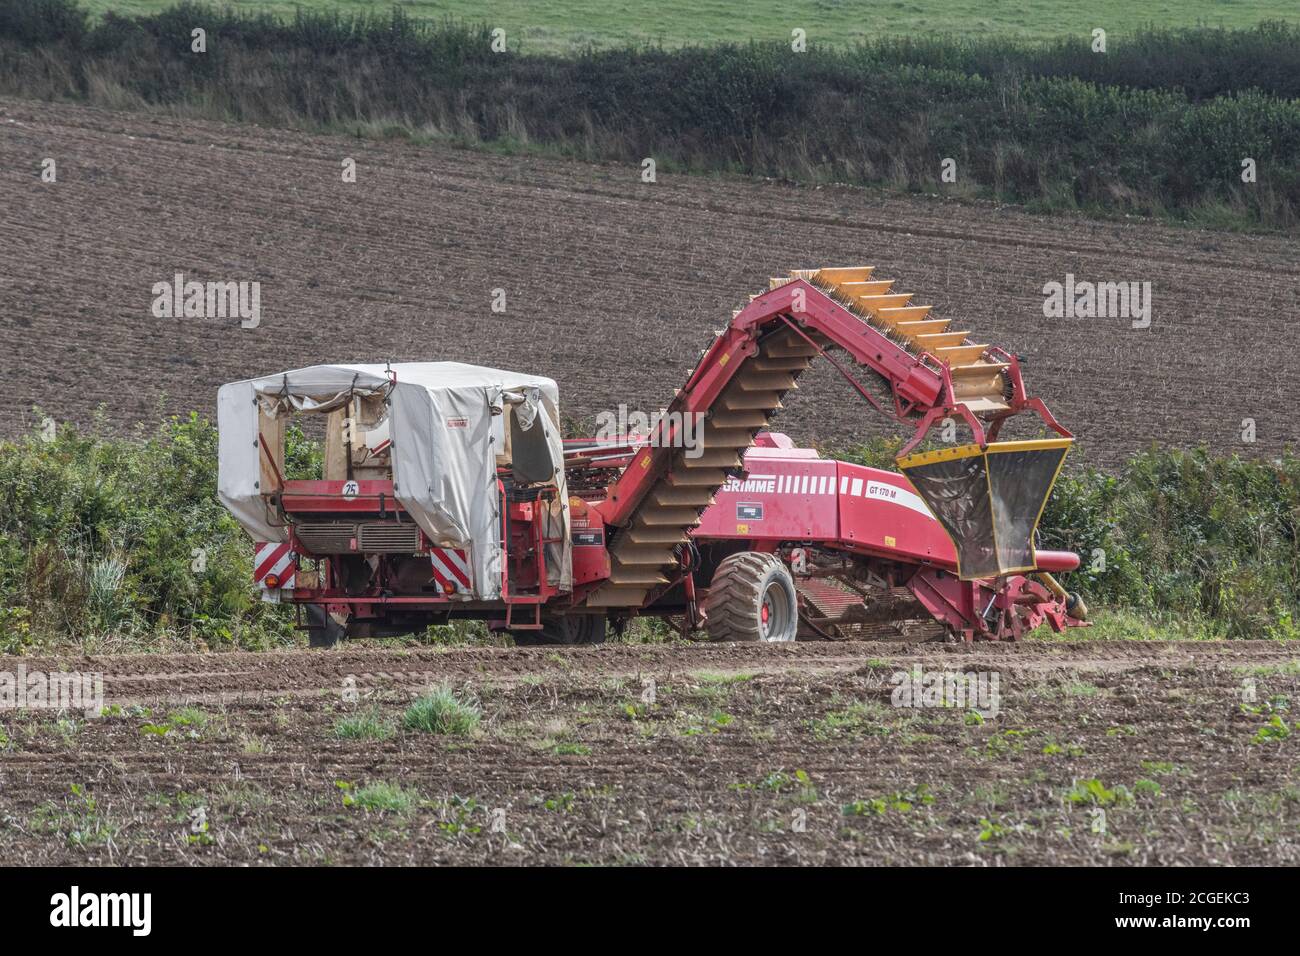 De-coupled GRIMME potato harvester at bottom of Cornish hillside potato field. For UK agriculture & food / UK potato production, British farming. Stock Photo